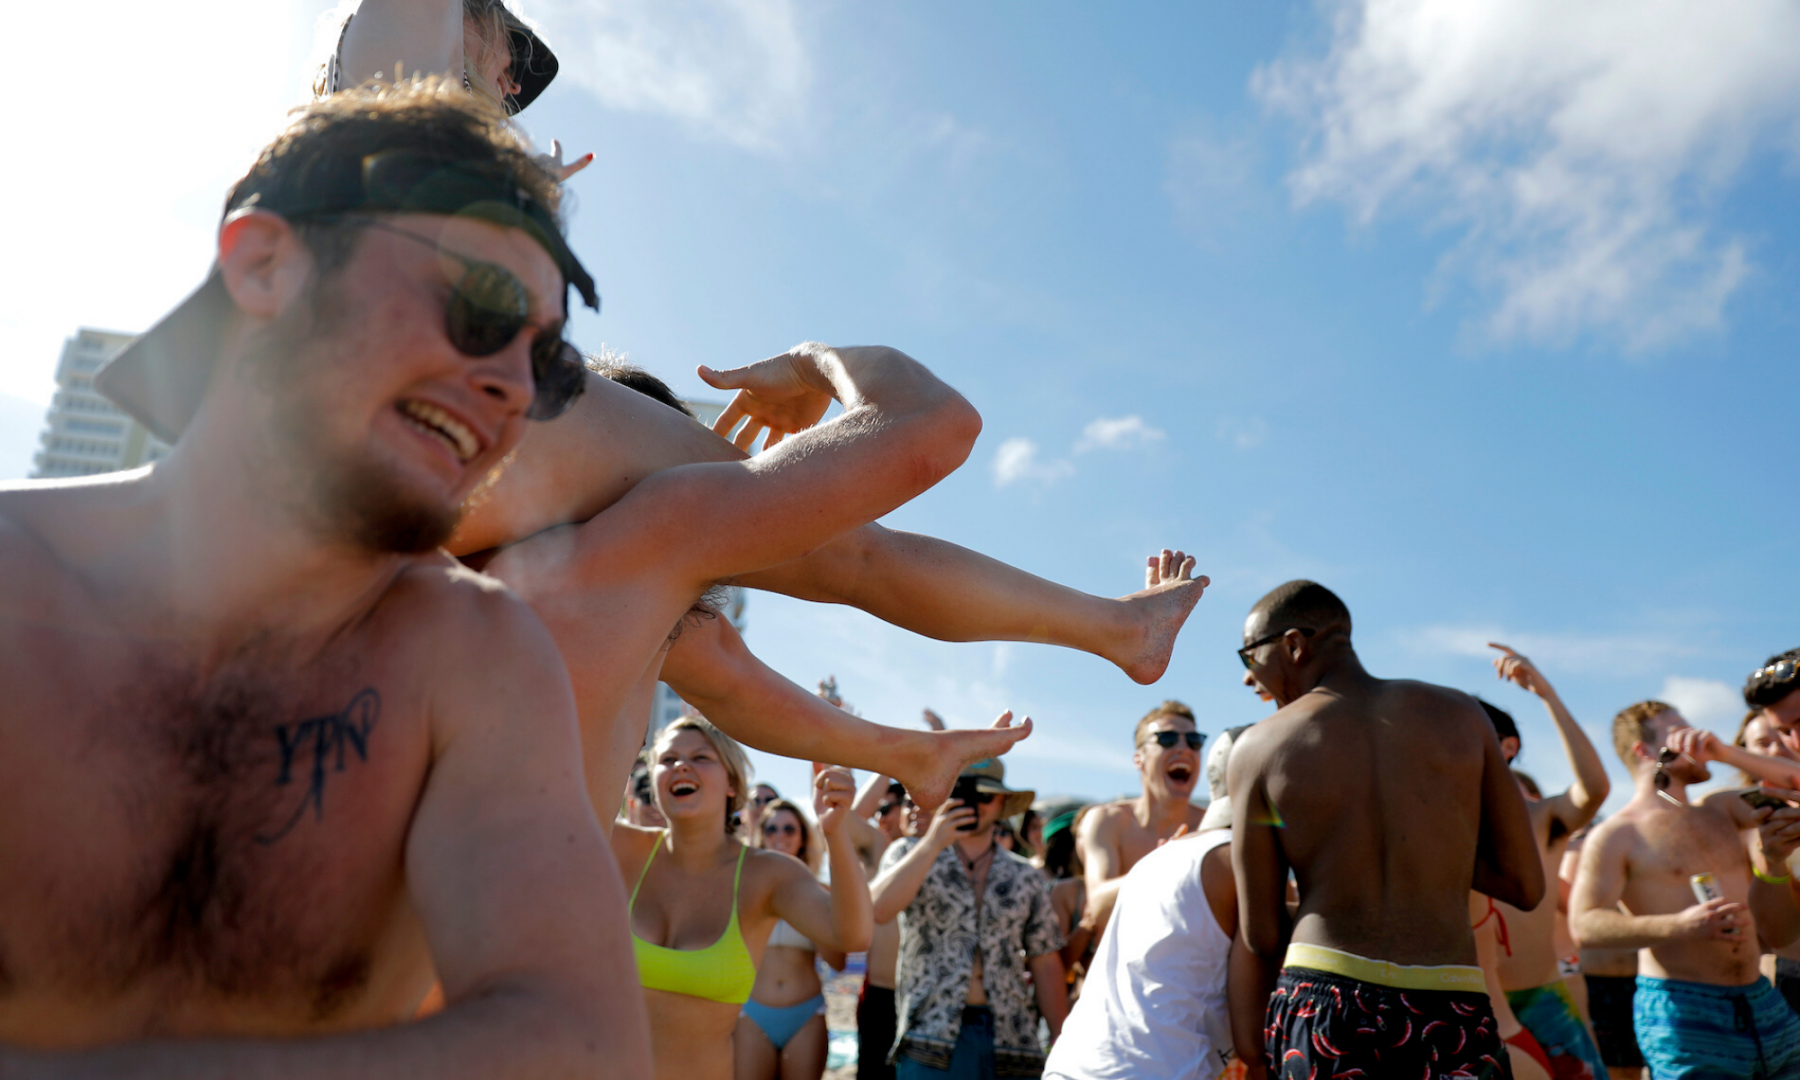 Spring break revelers party on the beach, Tuesday, March 17, 2020, in Pompano Beach, Fla. (Julio Cortez/AP Photo)